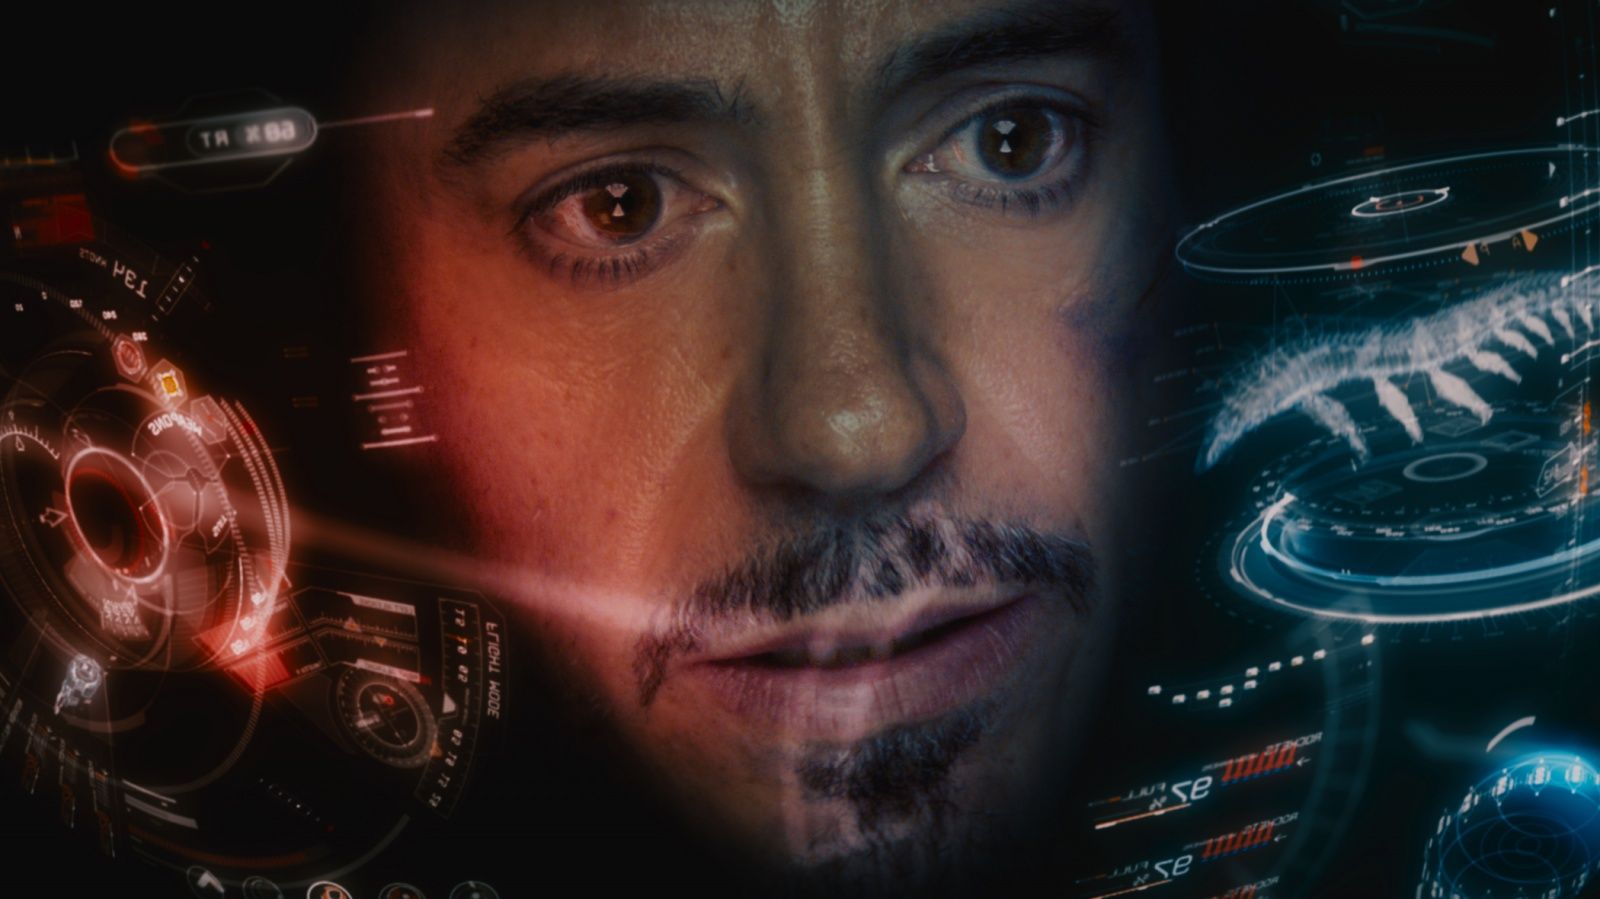 Crazyman Zuckerberg Wants to Build Iron Man Jarvis like Assistant